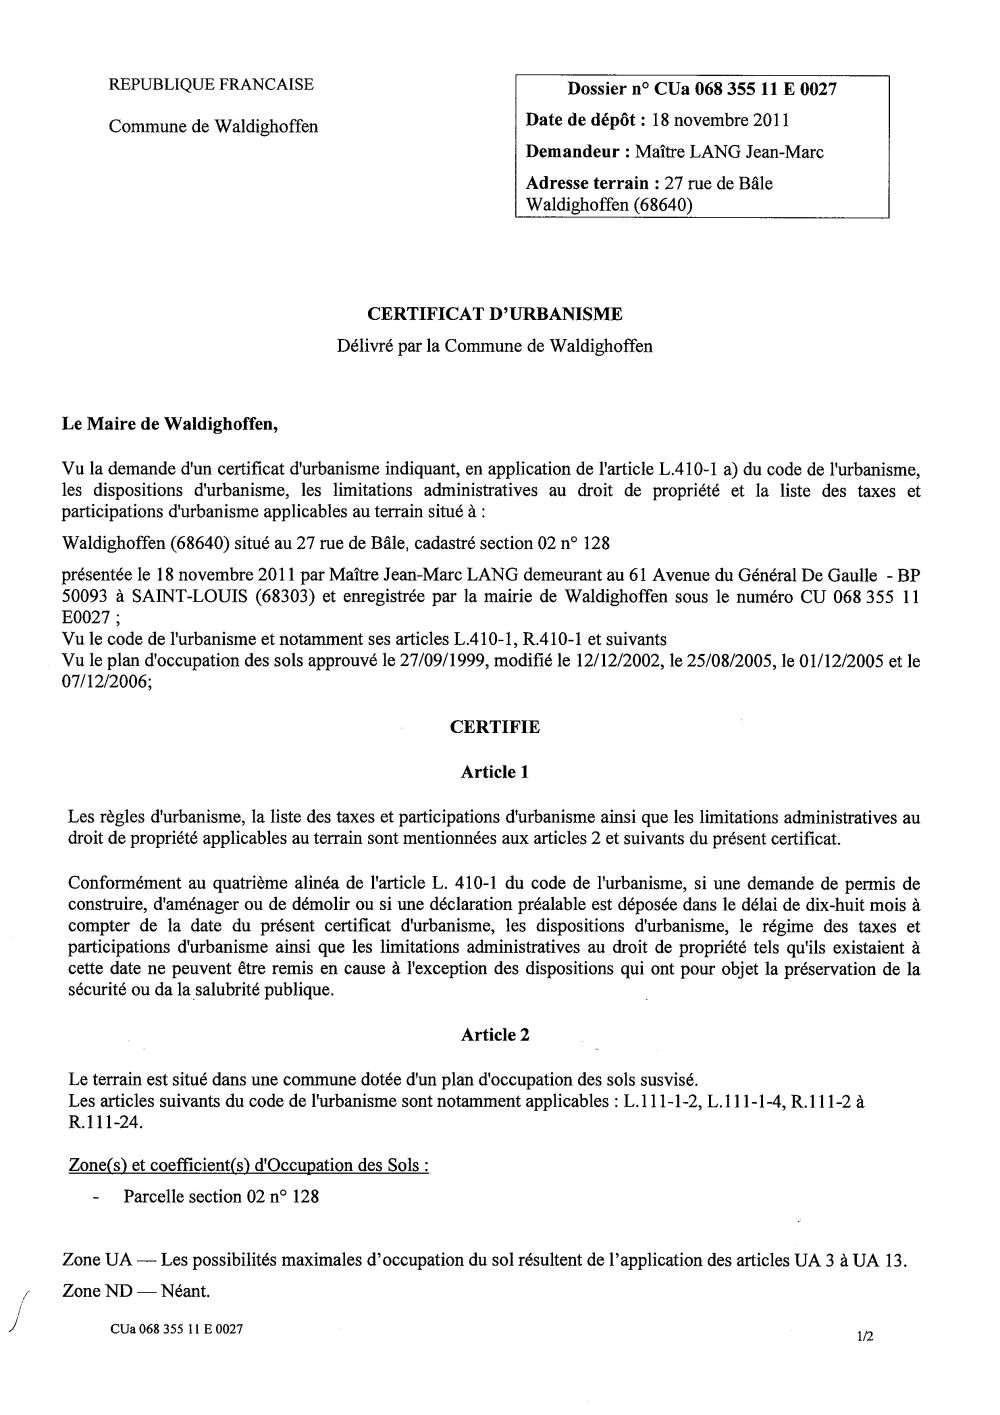 Certificat d'urbanisme n°11E0027 - Me LANG